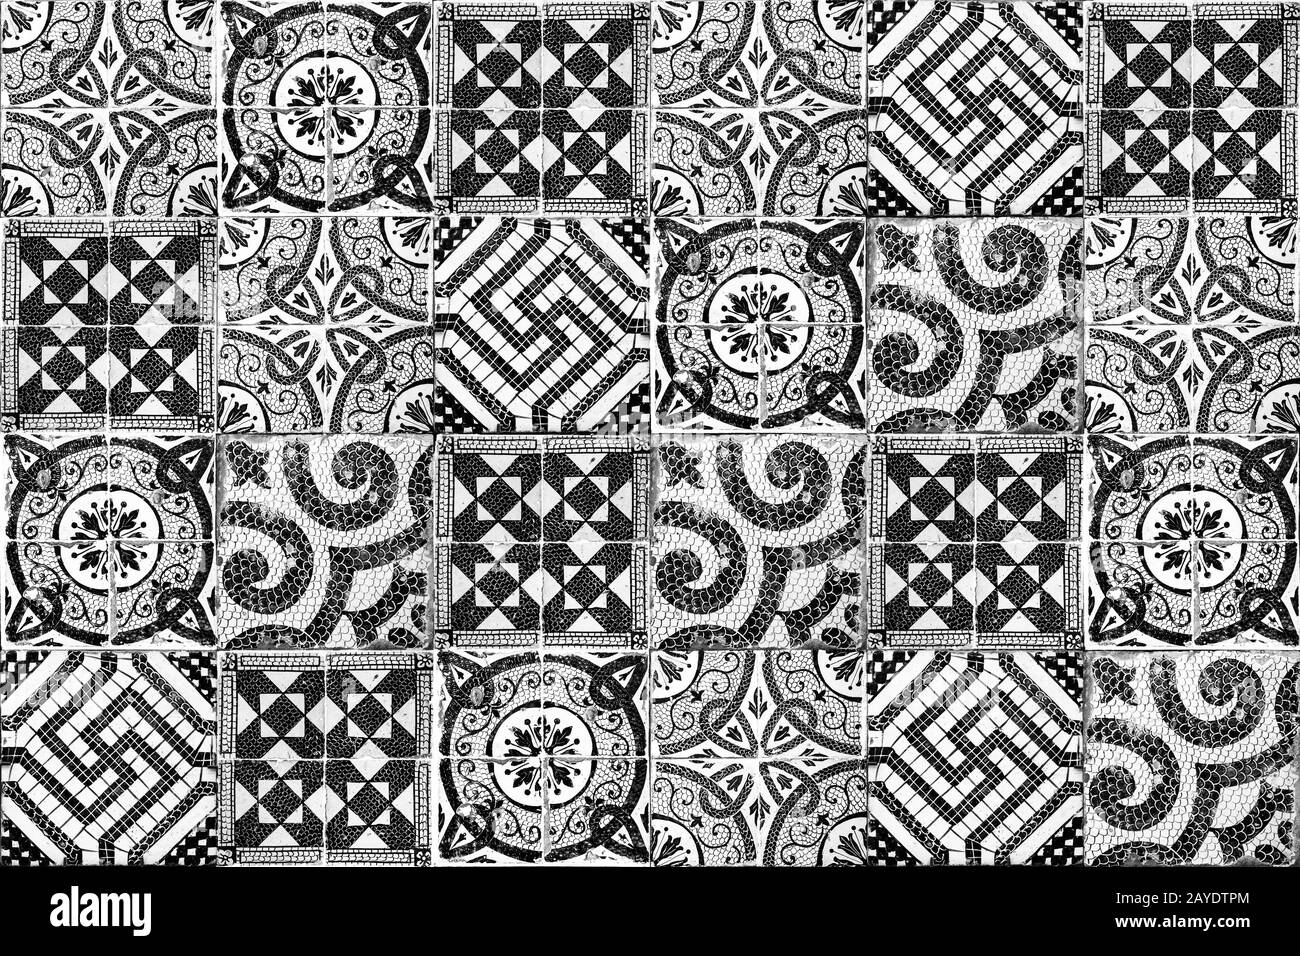 Background of vintage ceramic tiles Stock Photo